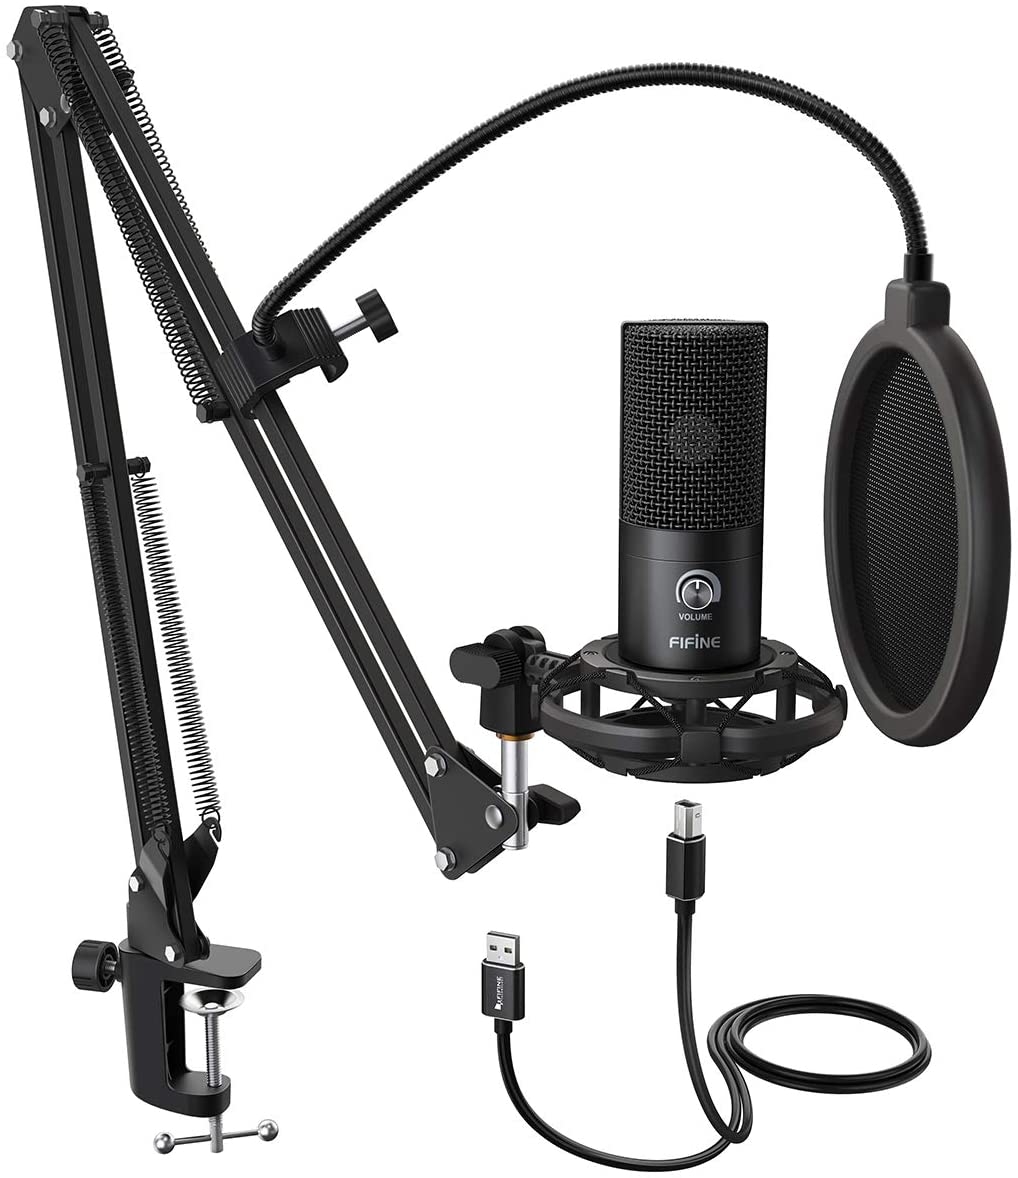 Fifine Studio USB Microphone 